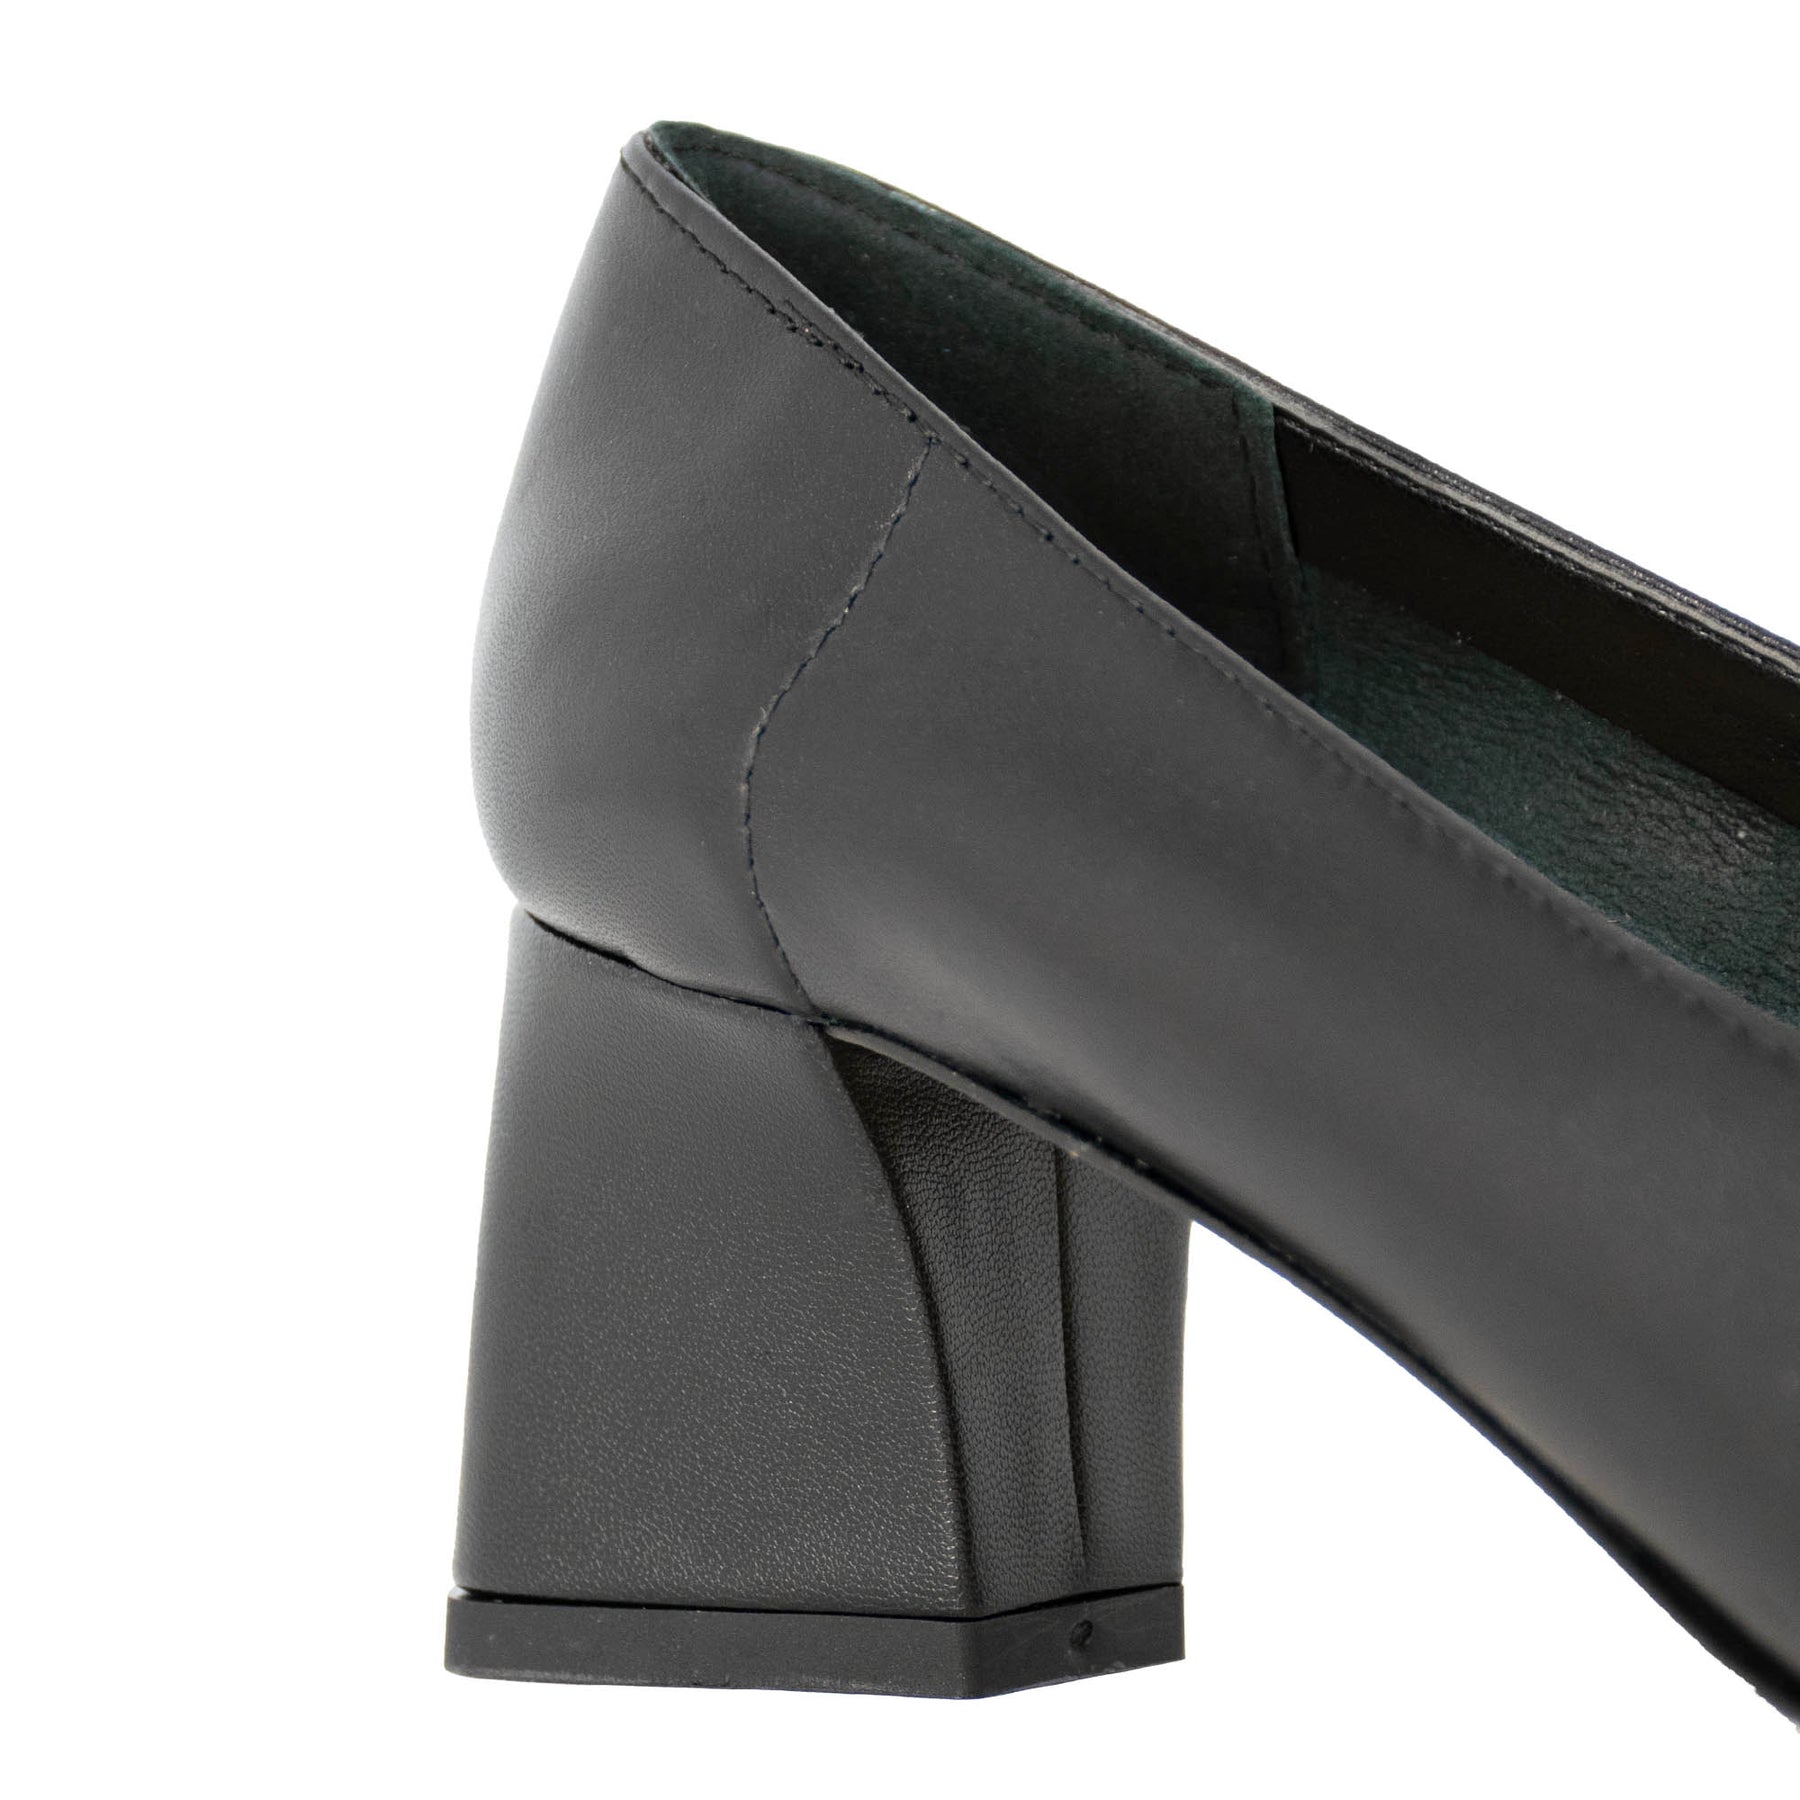 Women's pumps in black leather with medium heel